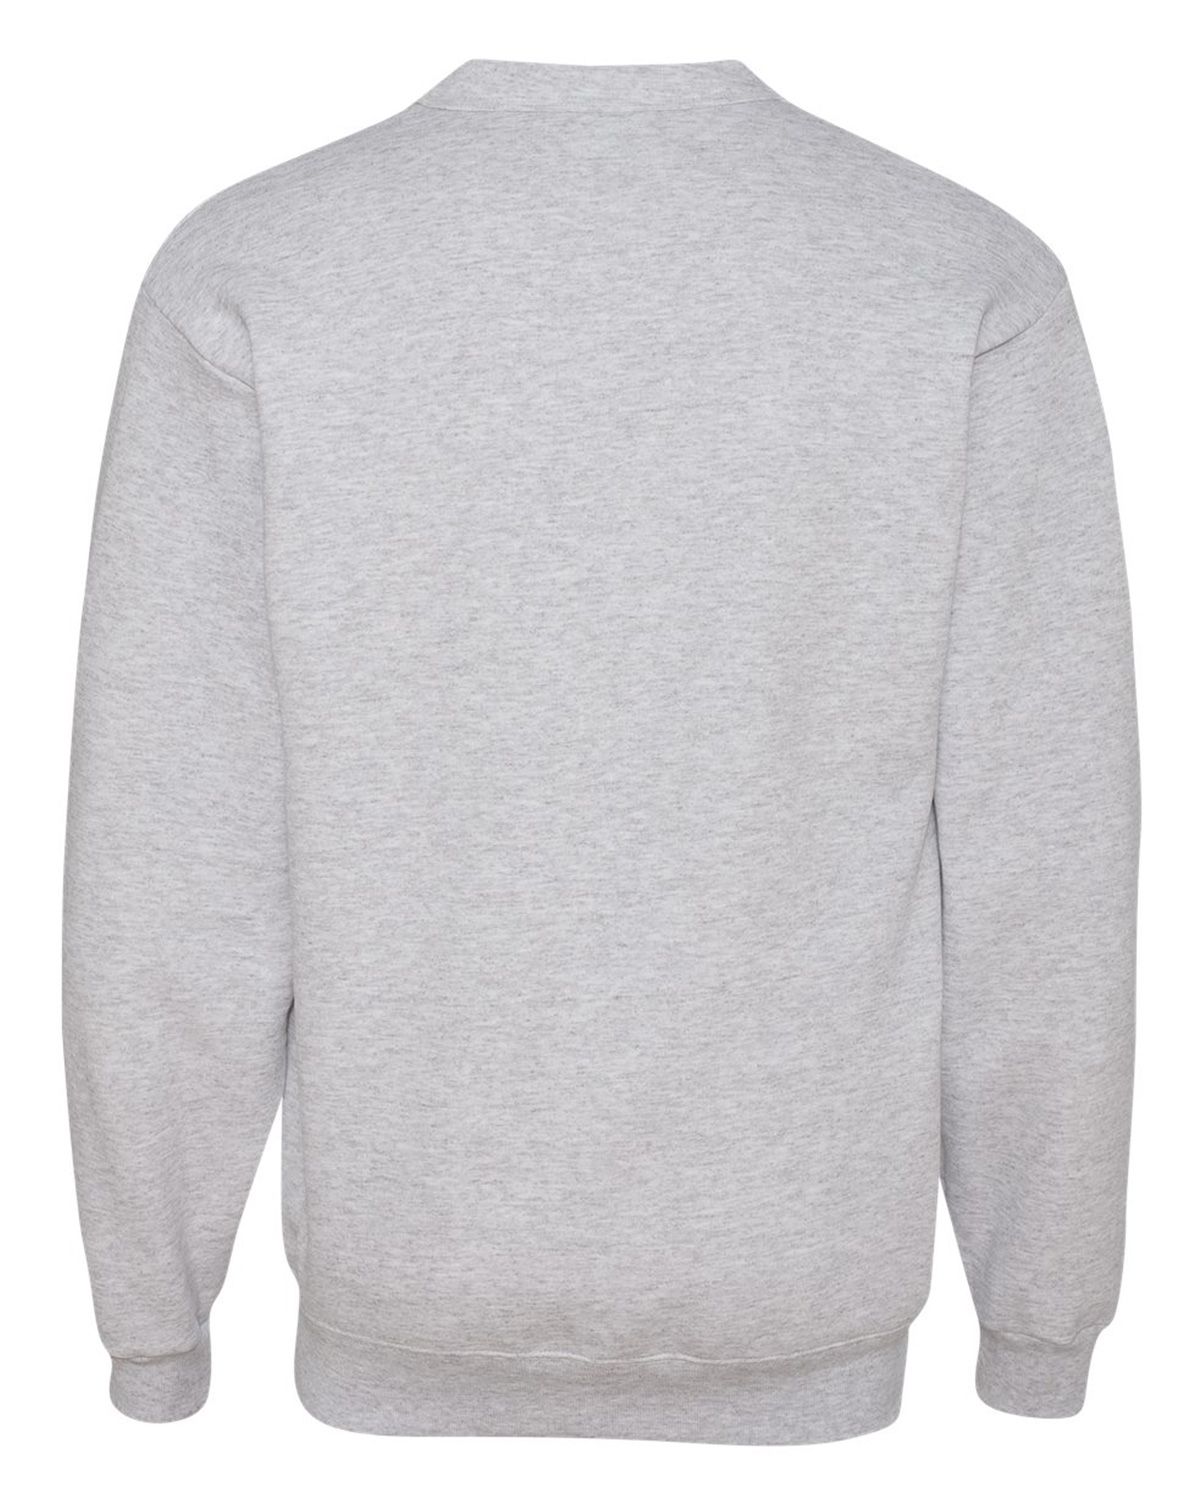 Jerzees 773MPR NuBlend Cardigan Sweatshirt - Free Shipping Available